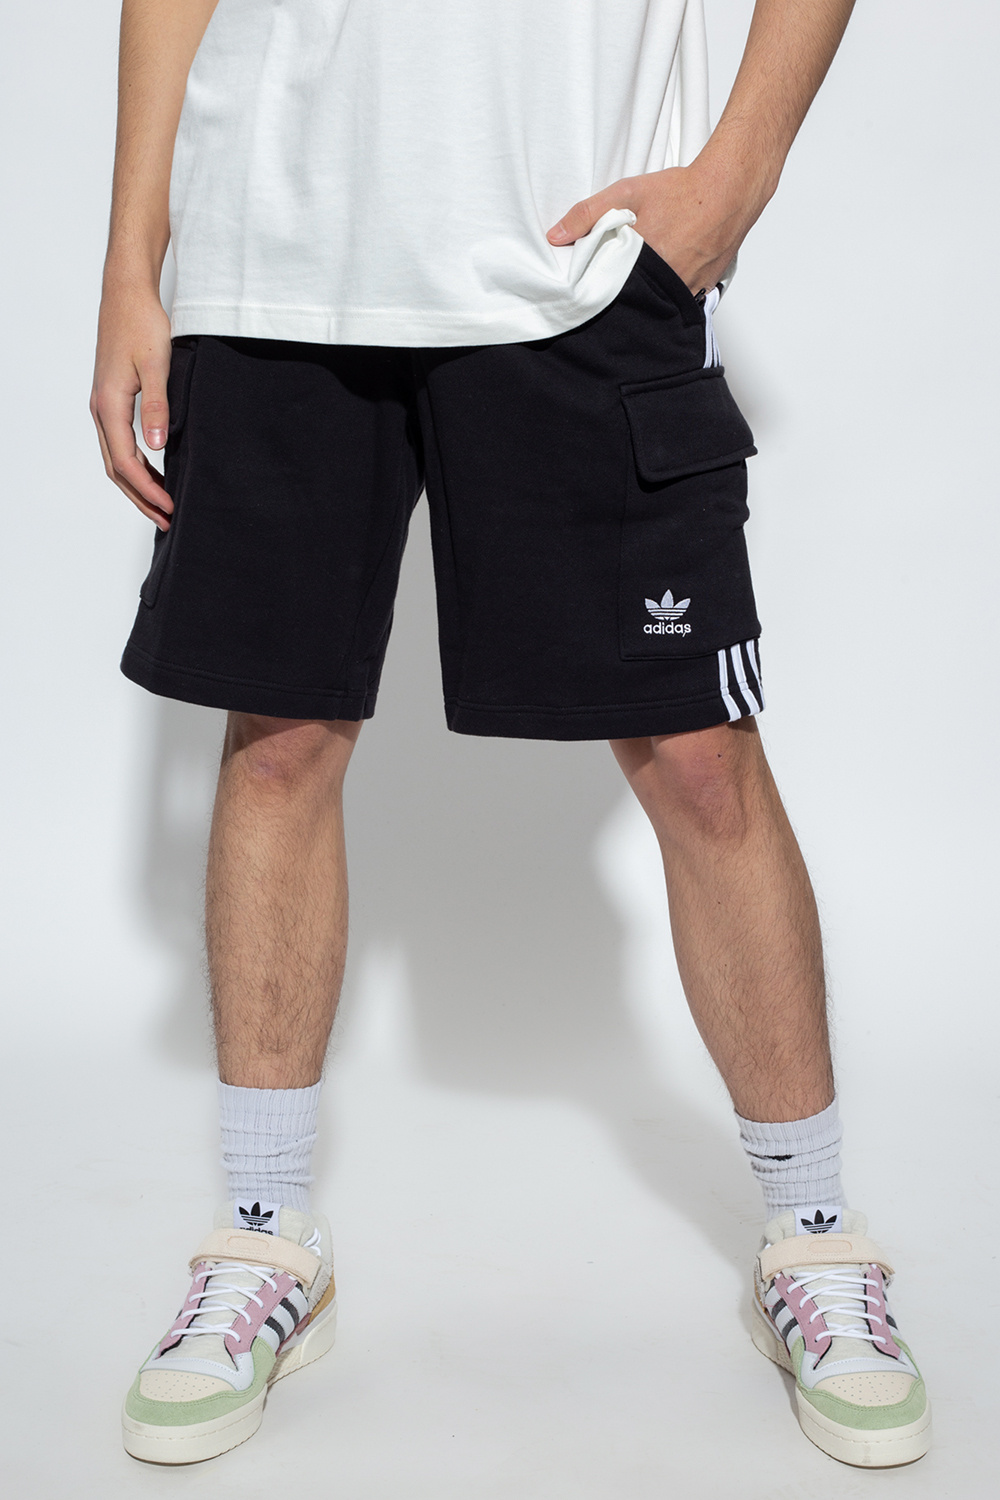 IetpShops Norway - Shorts with logo ADIDAS Originals - adidas Yung-1 EE5317  47 1 3